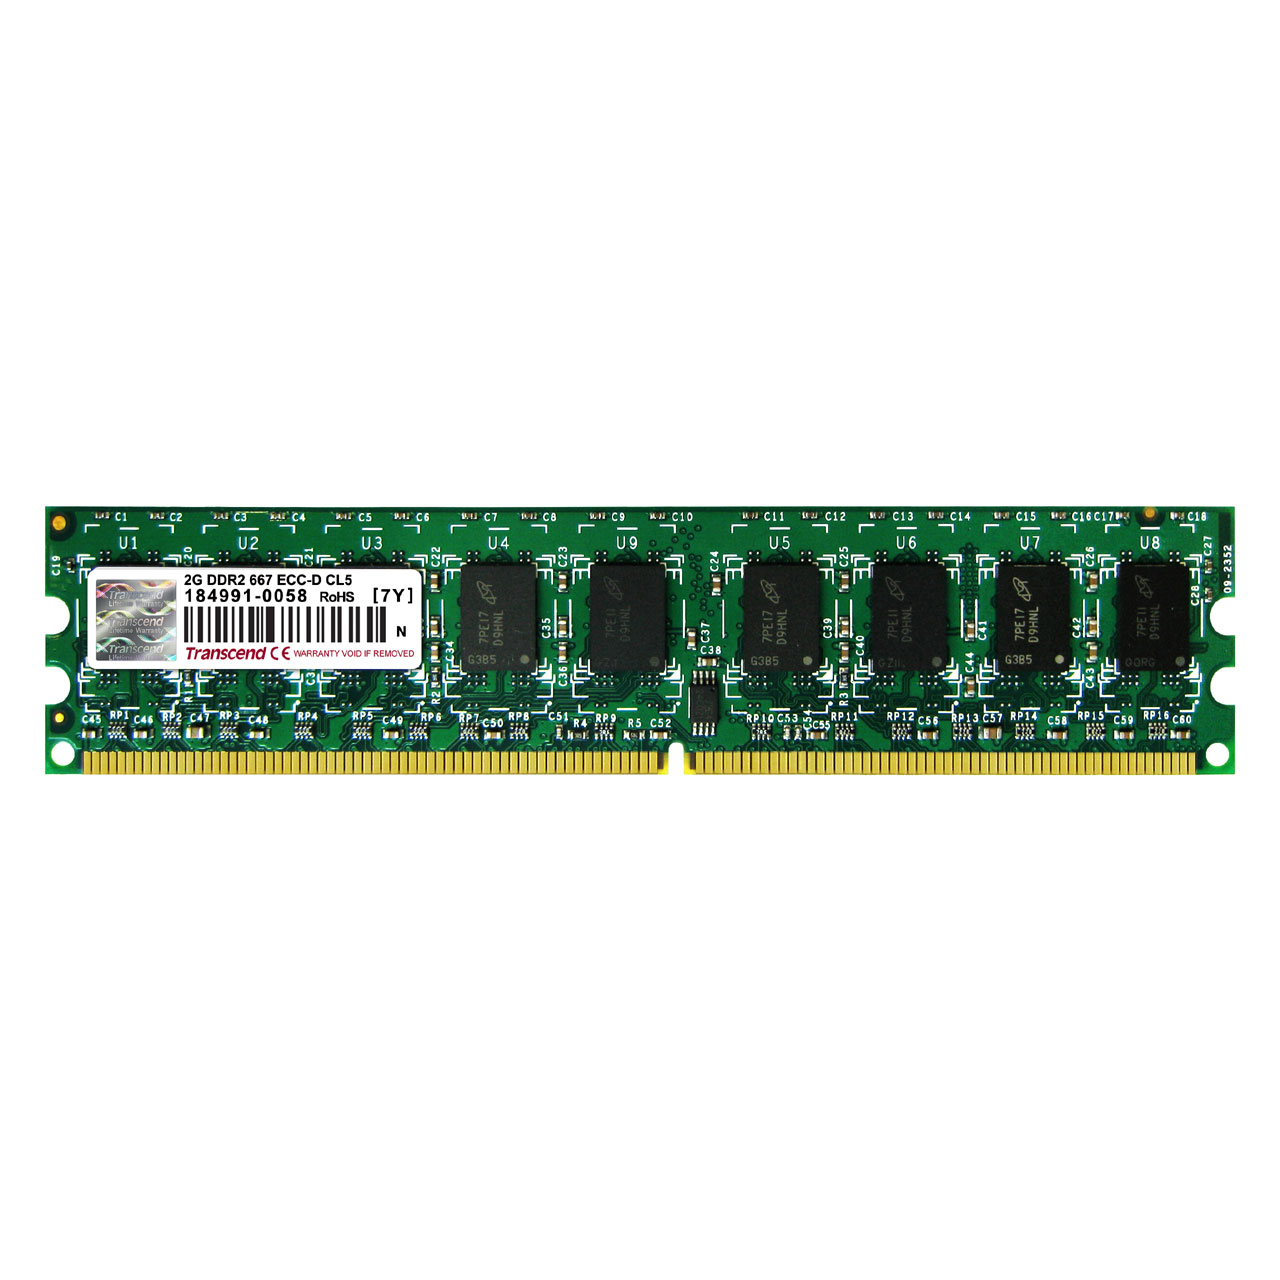 Transcend fXNgbvPCp݃ 2GB DDR2-667 PC2-5300 ECC DIMM TS256MLQ72V6U TS256MLQ72V6U